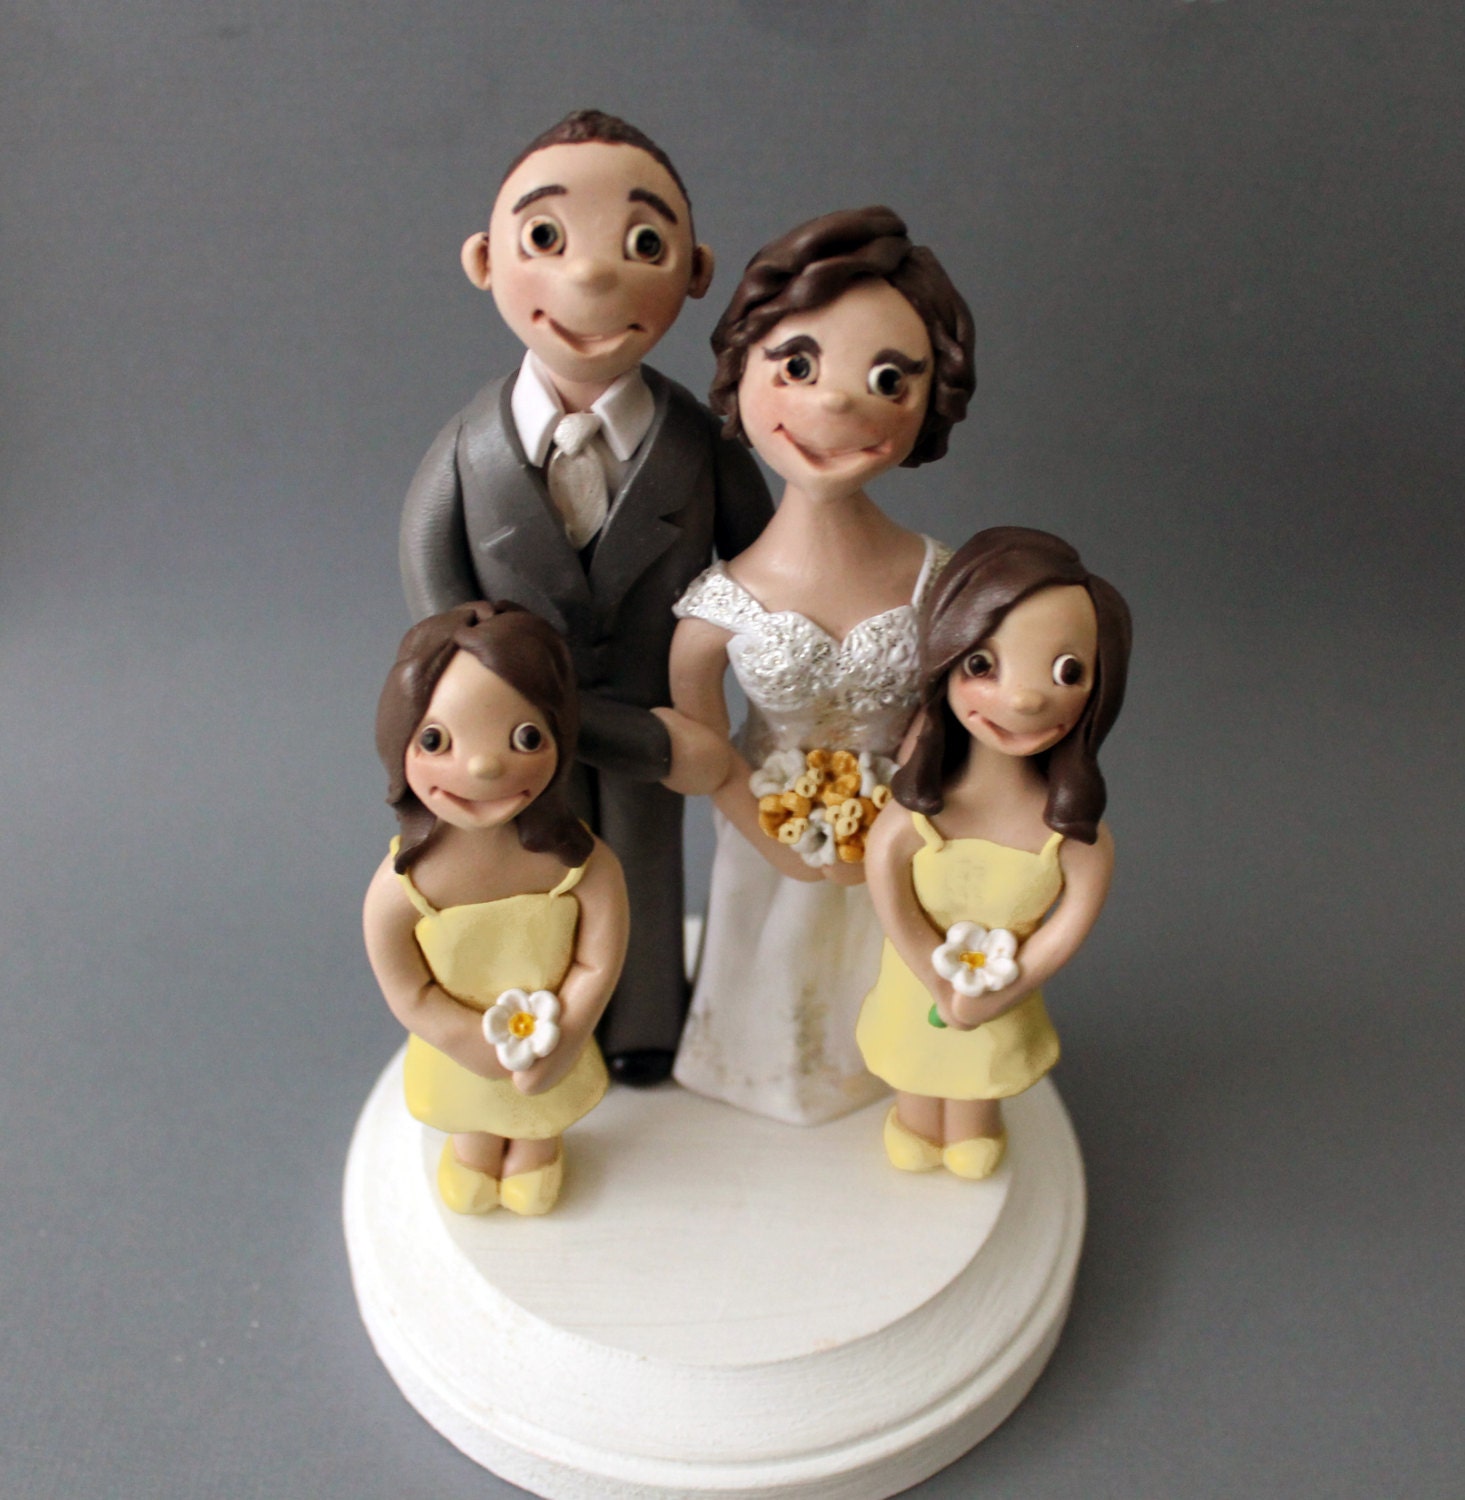 Flower girl figurines for wedding cakes